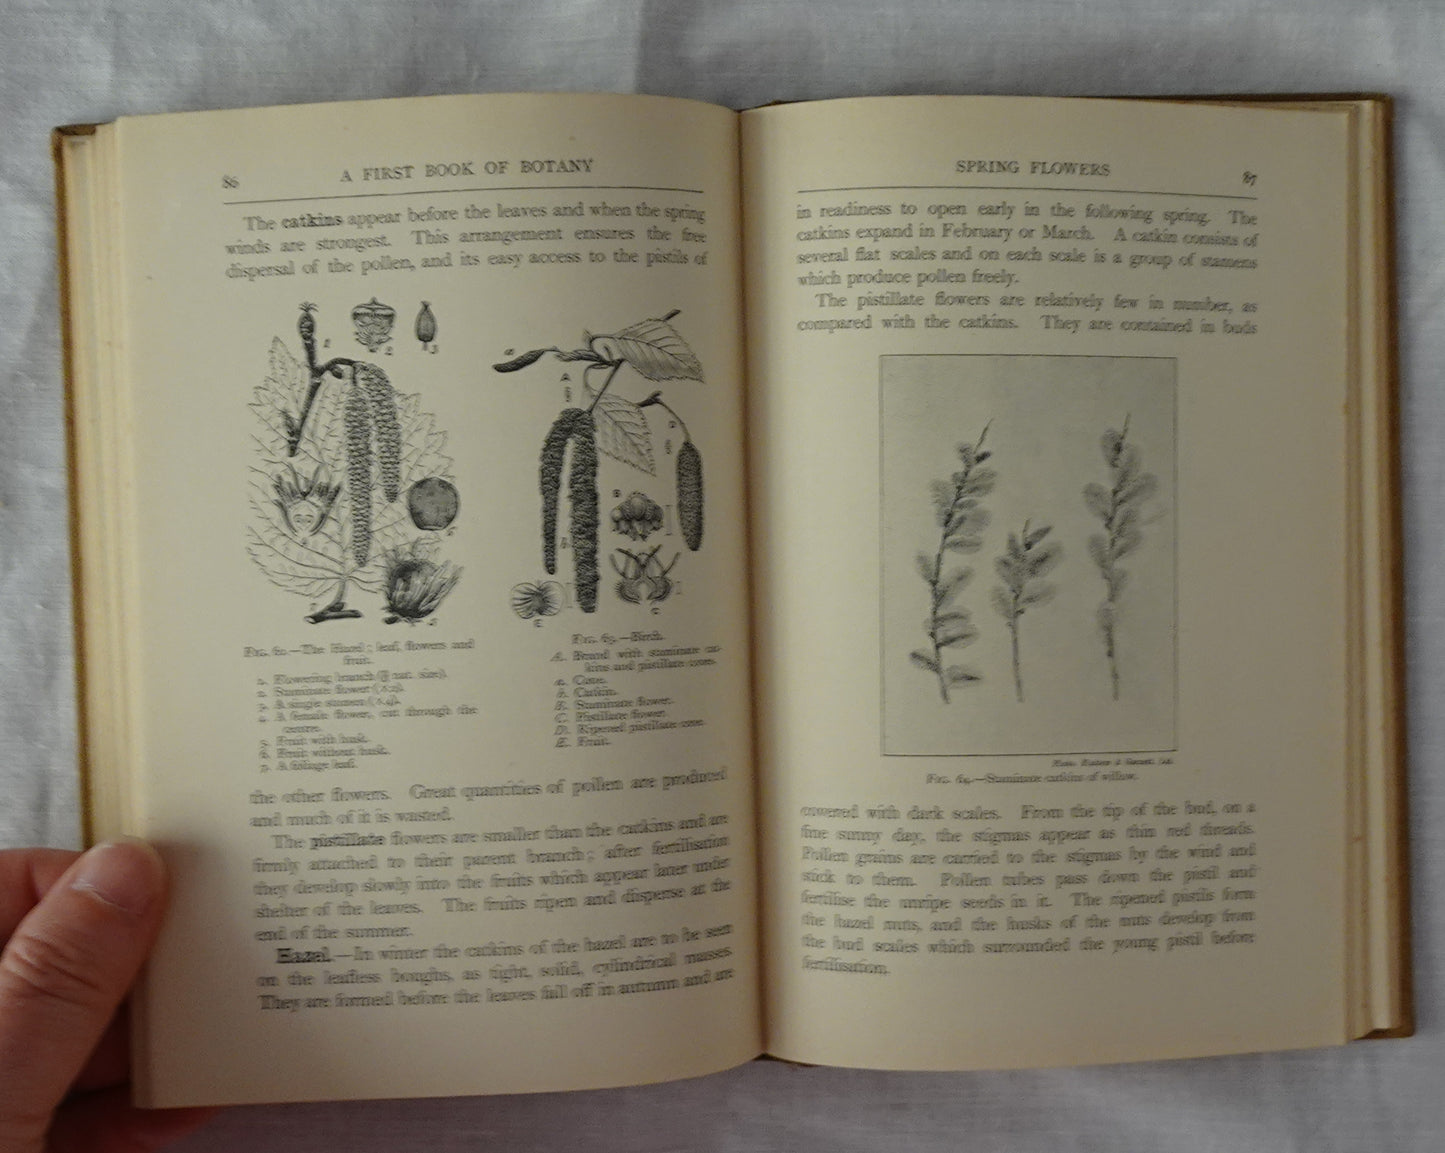 A First Book of Botany by Elizabeth Healey